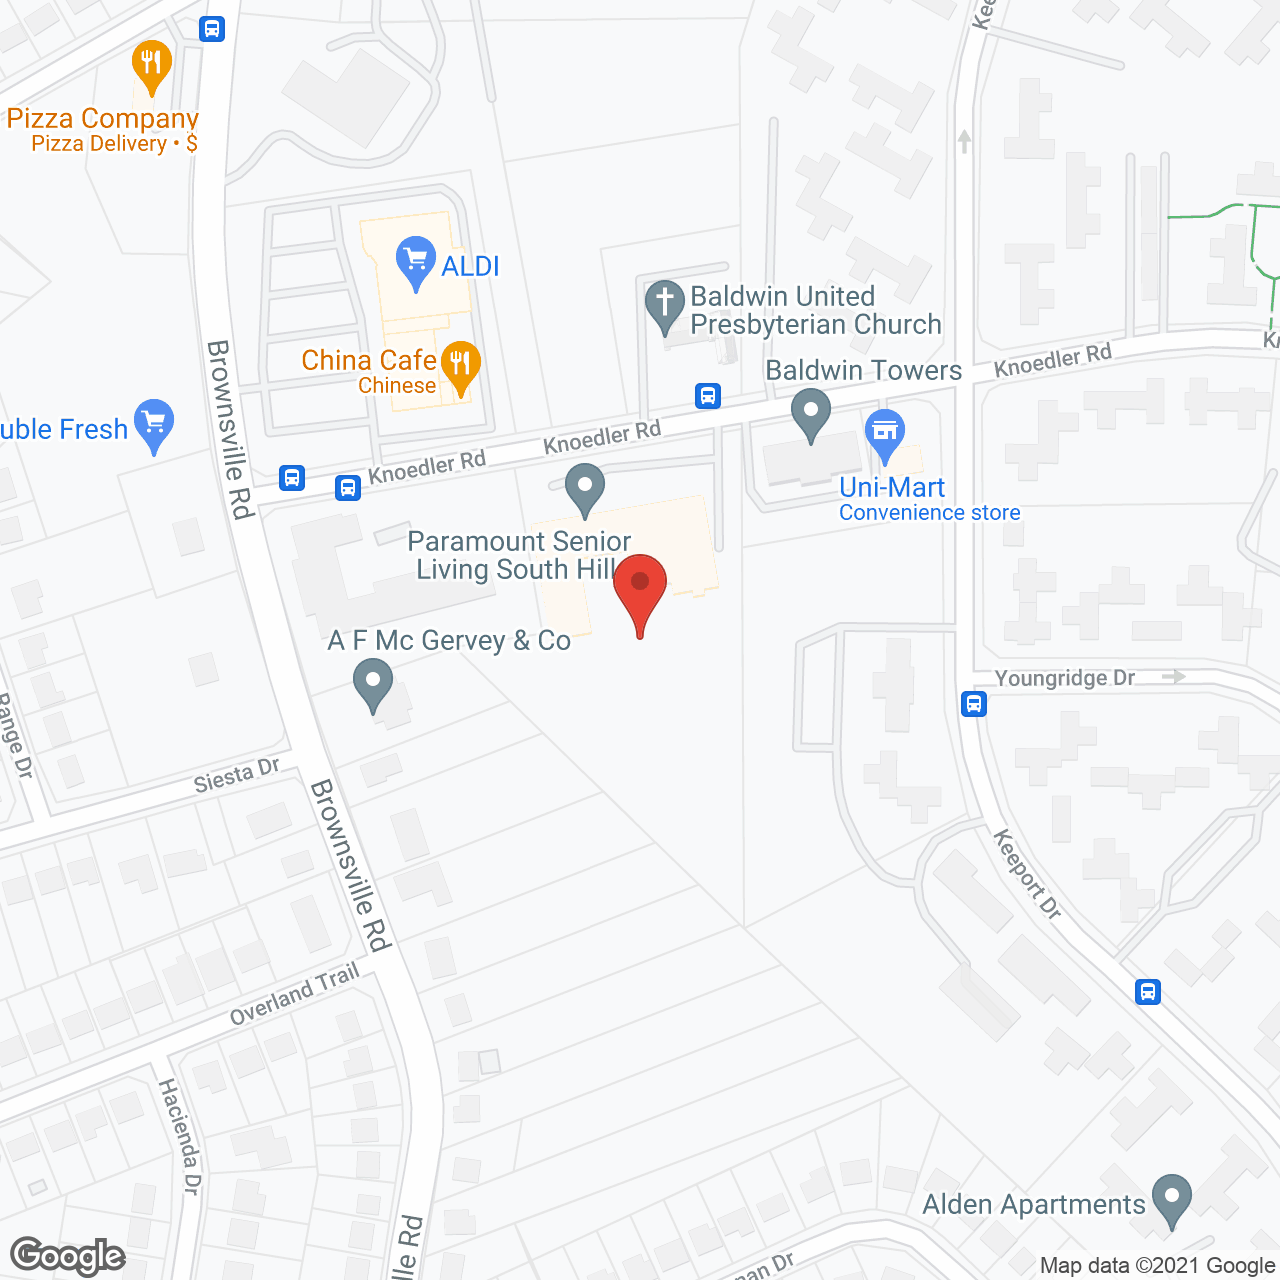 Paramount Senior Living at South Hills in google map